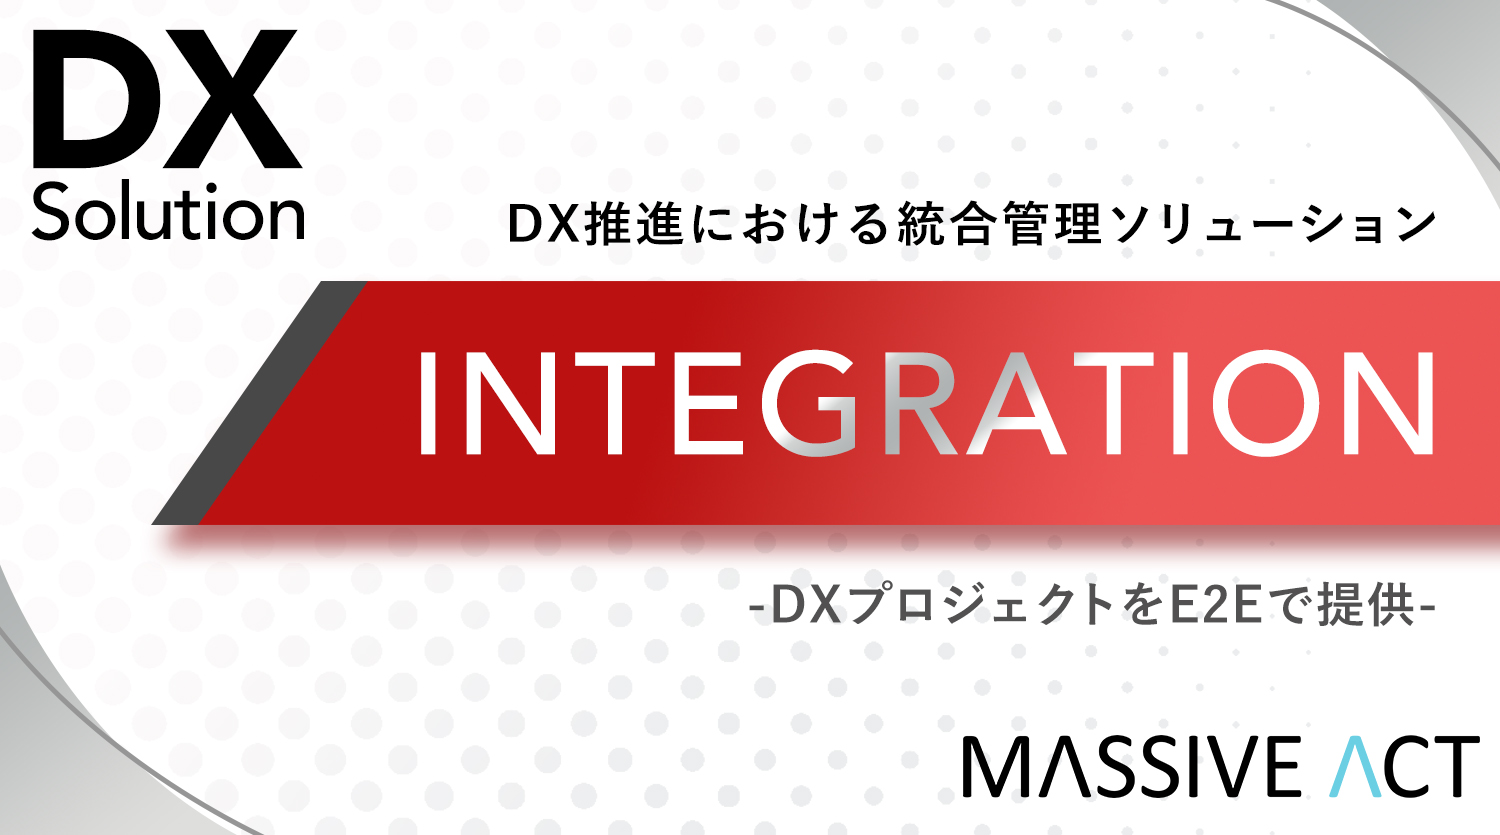 DX統合管理ソリューション「INTEGRATION」